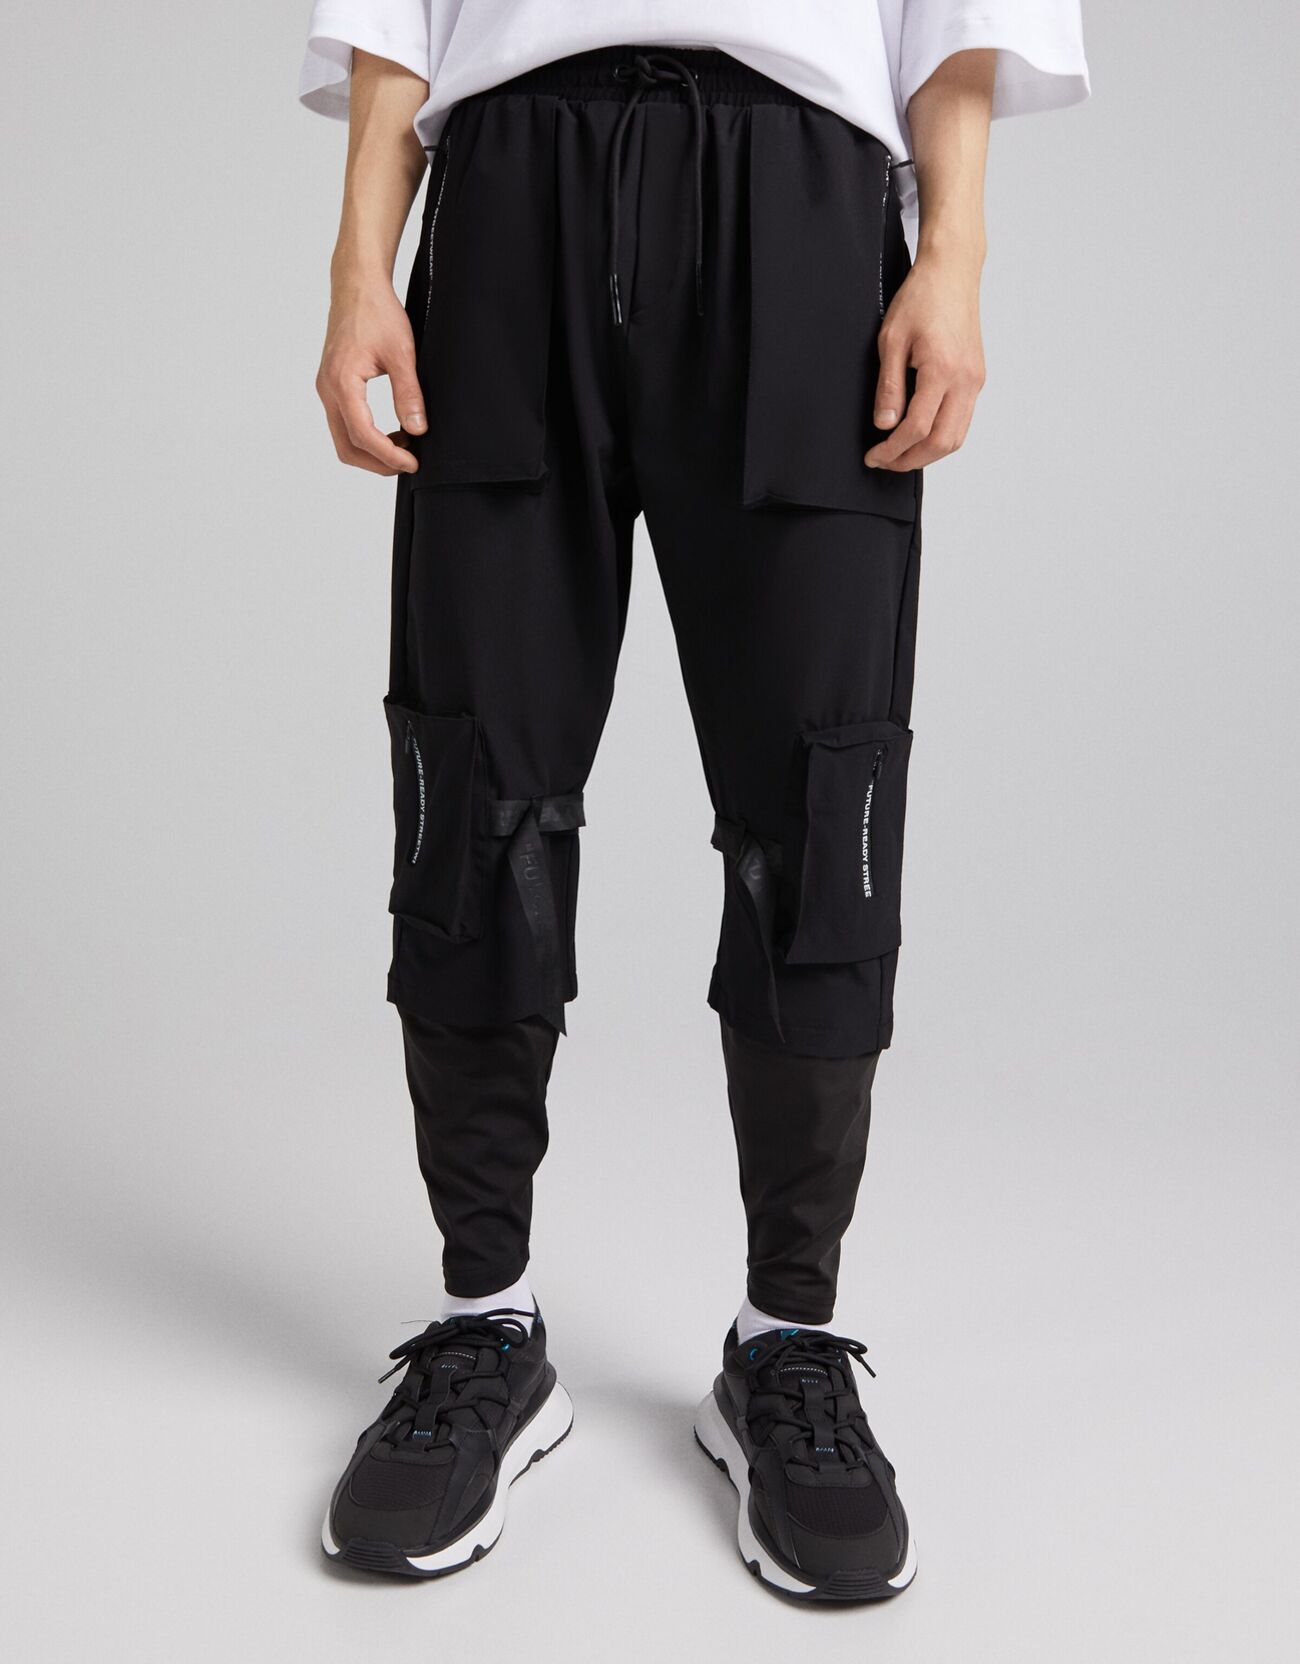 Bershka Pantalon Jogger Future-Ready Activewear Multifonction Avec Leggings Homme L Noir